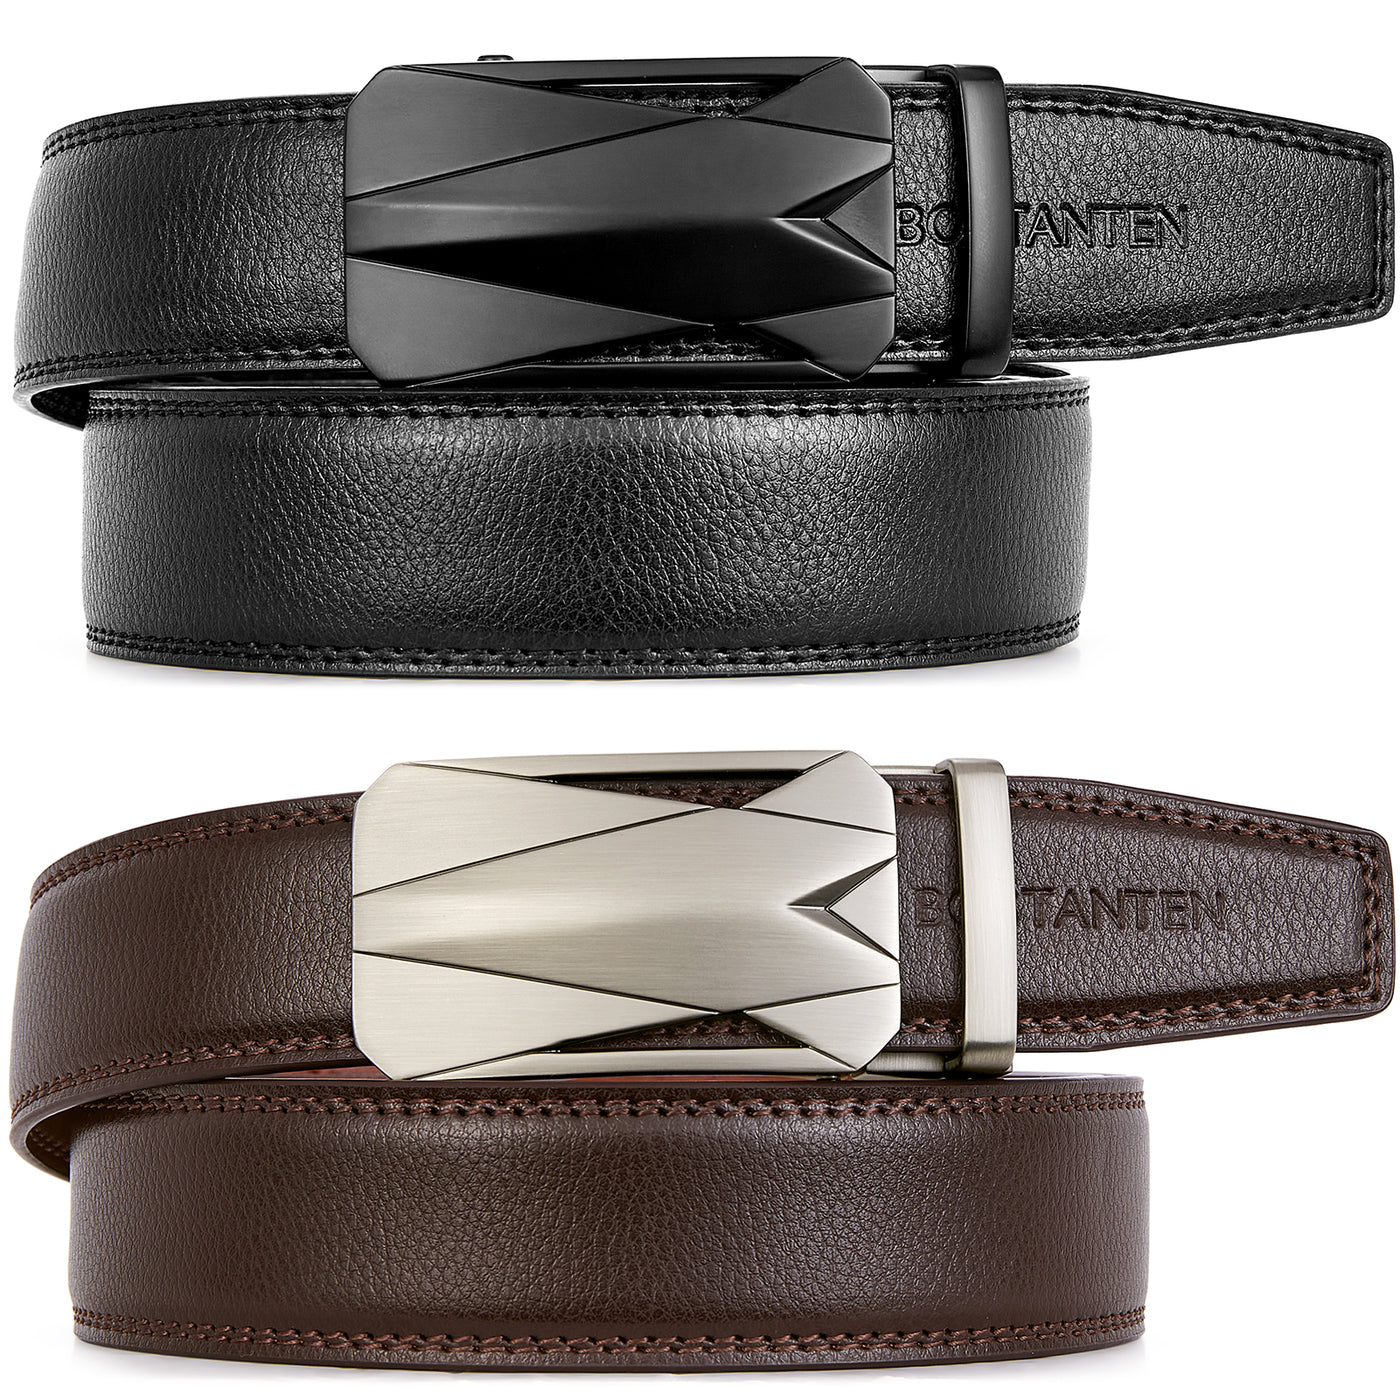 BOSTANTEN Men's Ratchet Dress Belts 2 Packs, Genuine Leather Belts for Men with Click Sliding Bunkle, Trim to Fit - BOSTANTEN